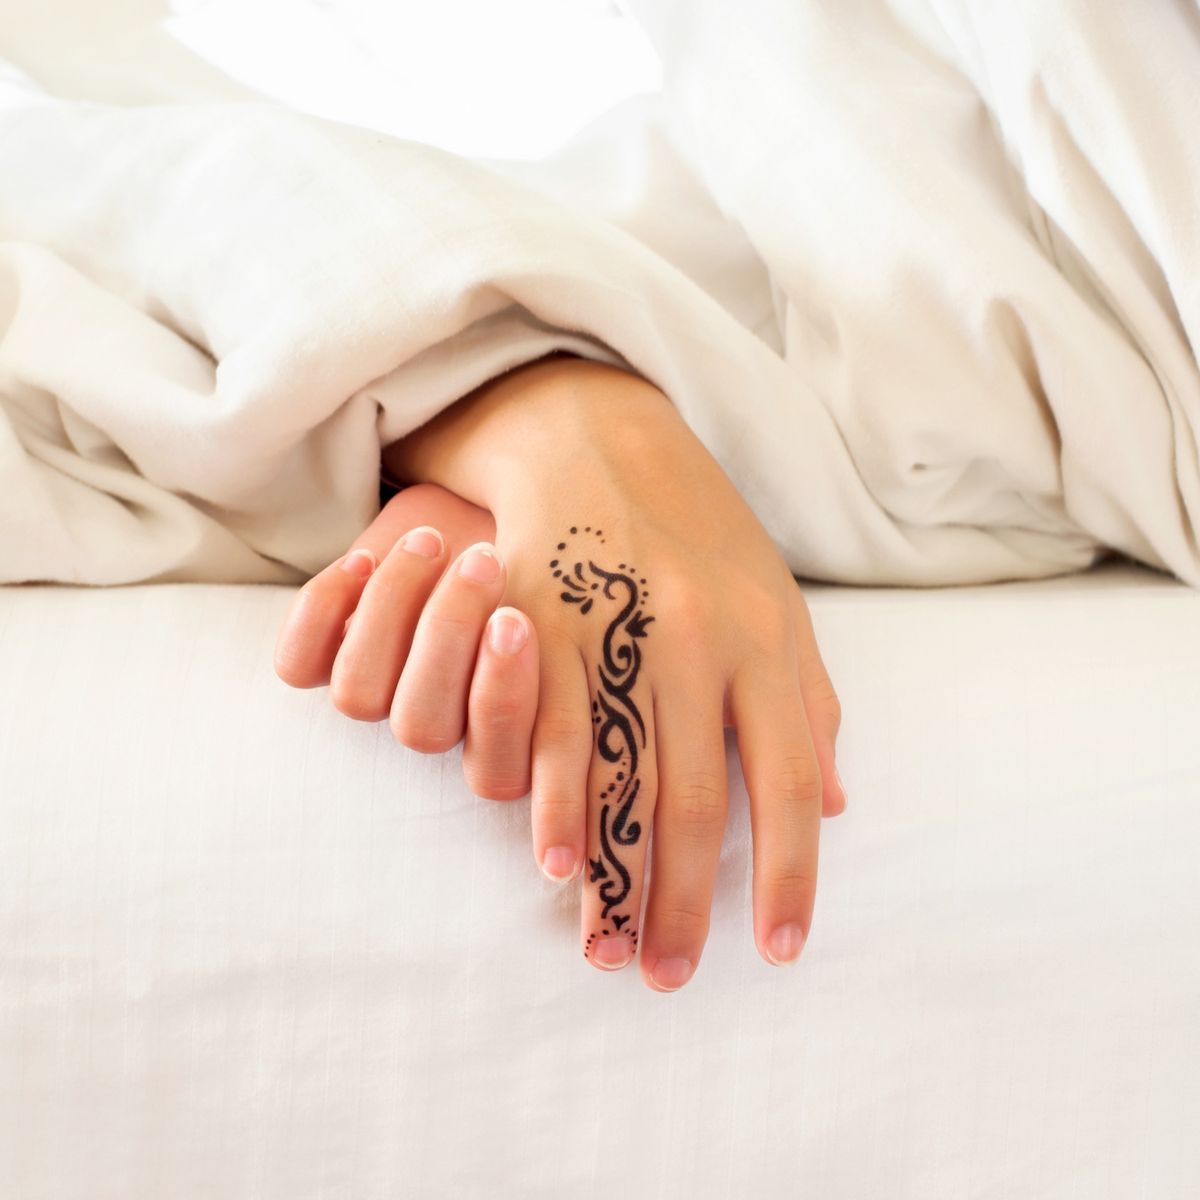 Frauen tattoo rippen motive docs.shippable.com.s3-website-us-west-2.amazonaws.com ›